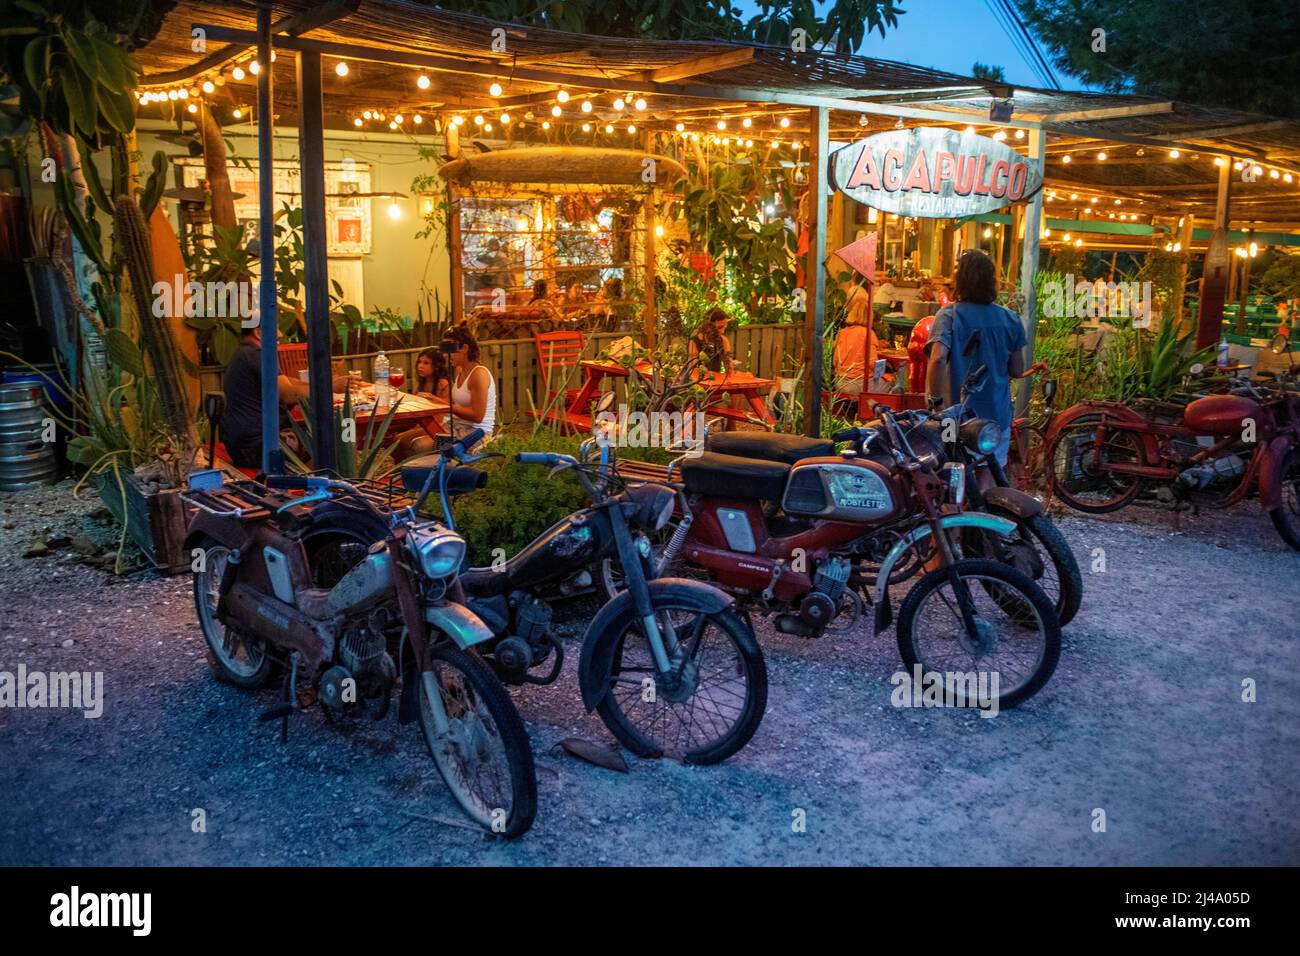 Motorbilkes retrò nel bar ristorante hippie Acapulco Surf Bar, es Calo, Formentera, Isole Baleari, Spagna. Foto Stock